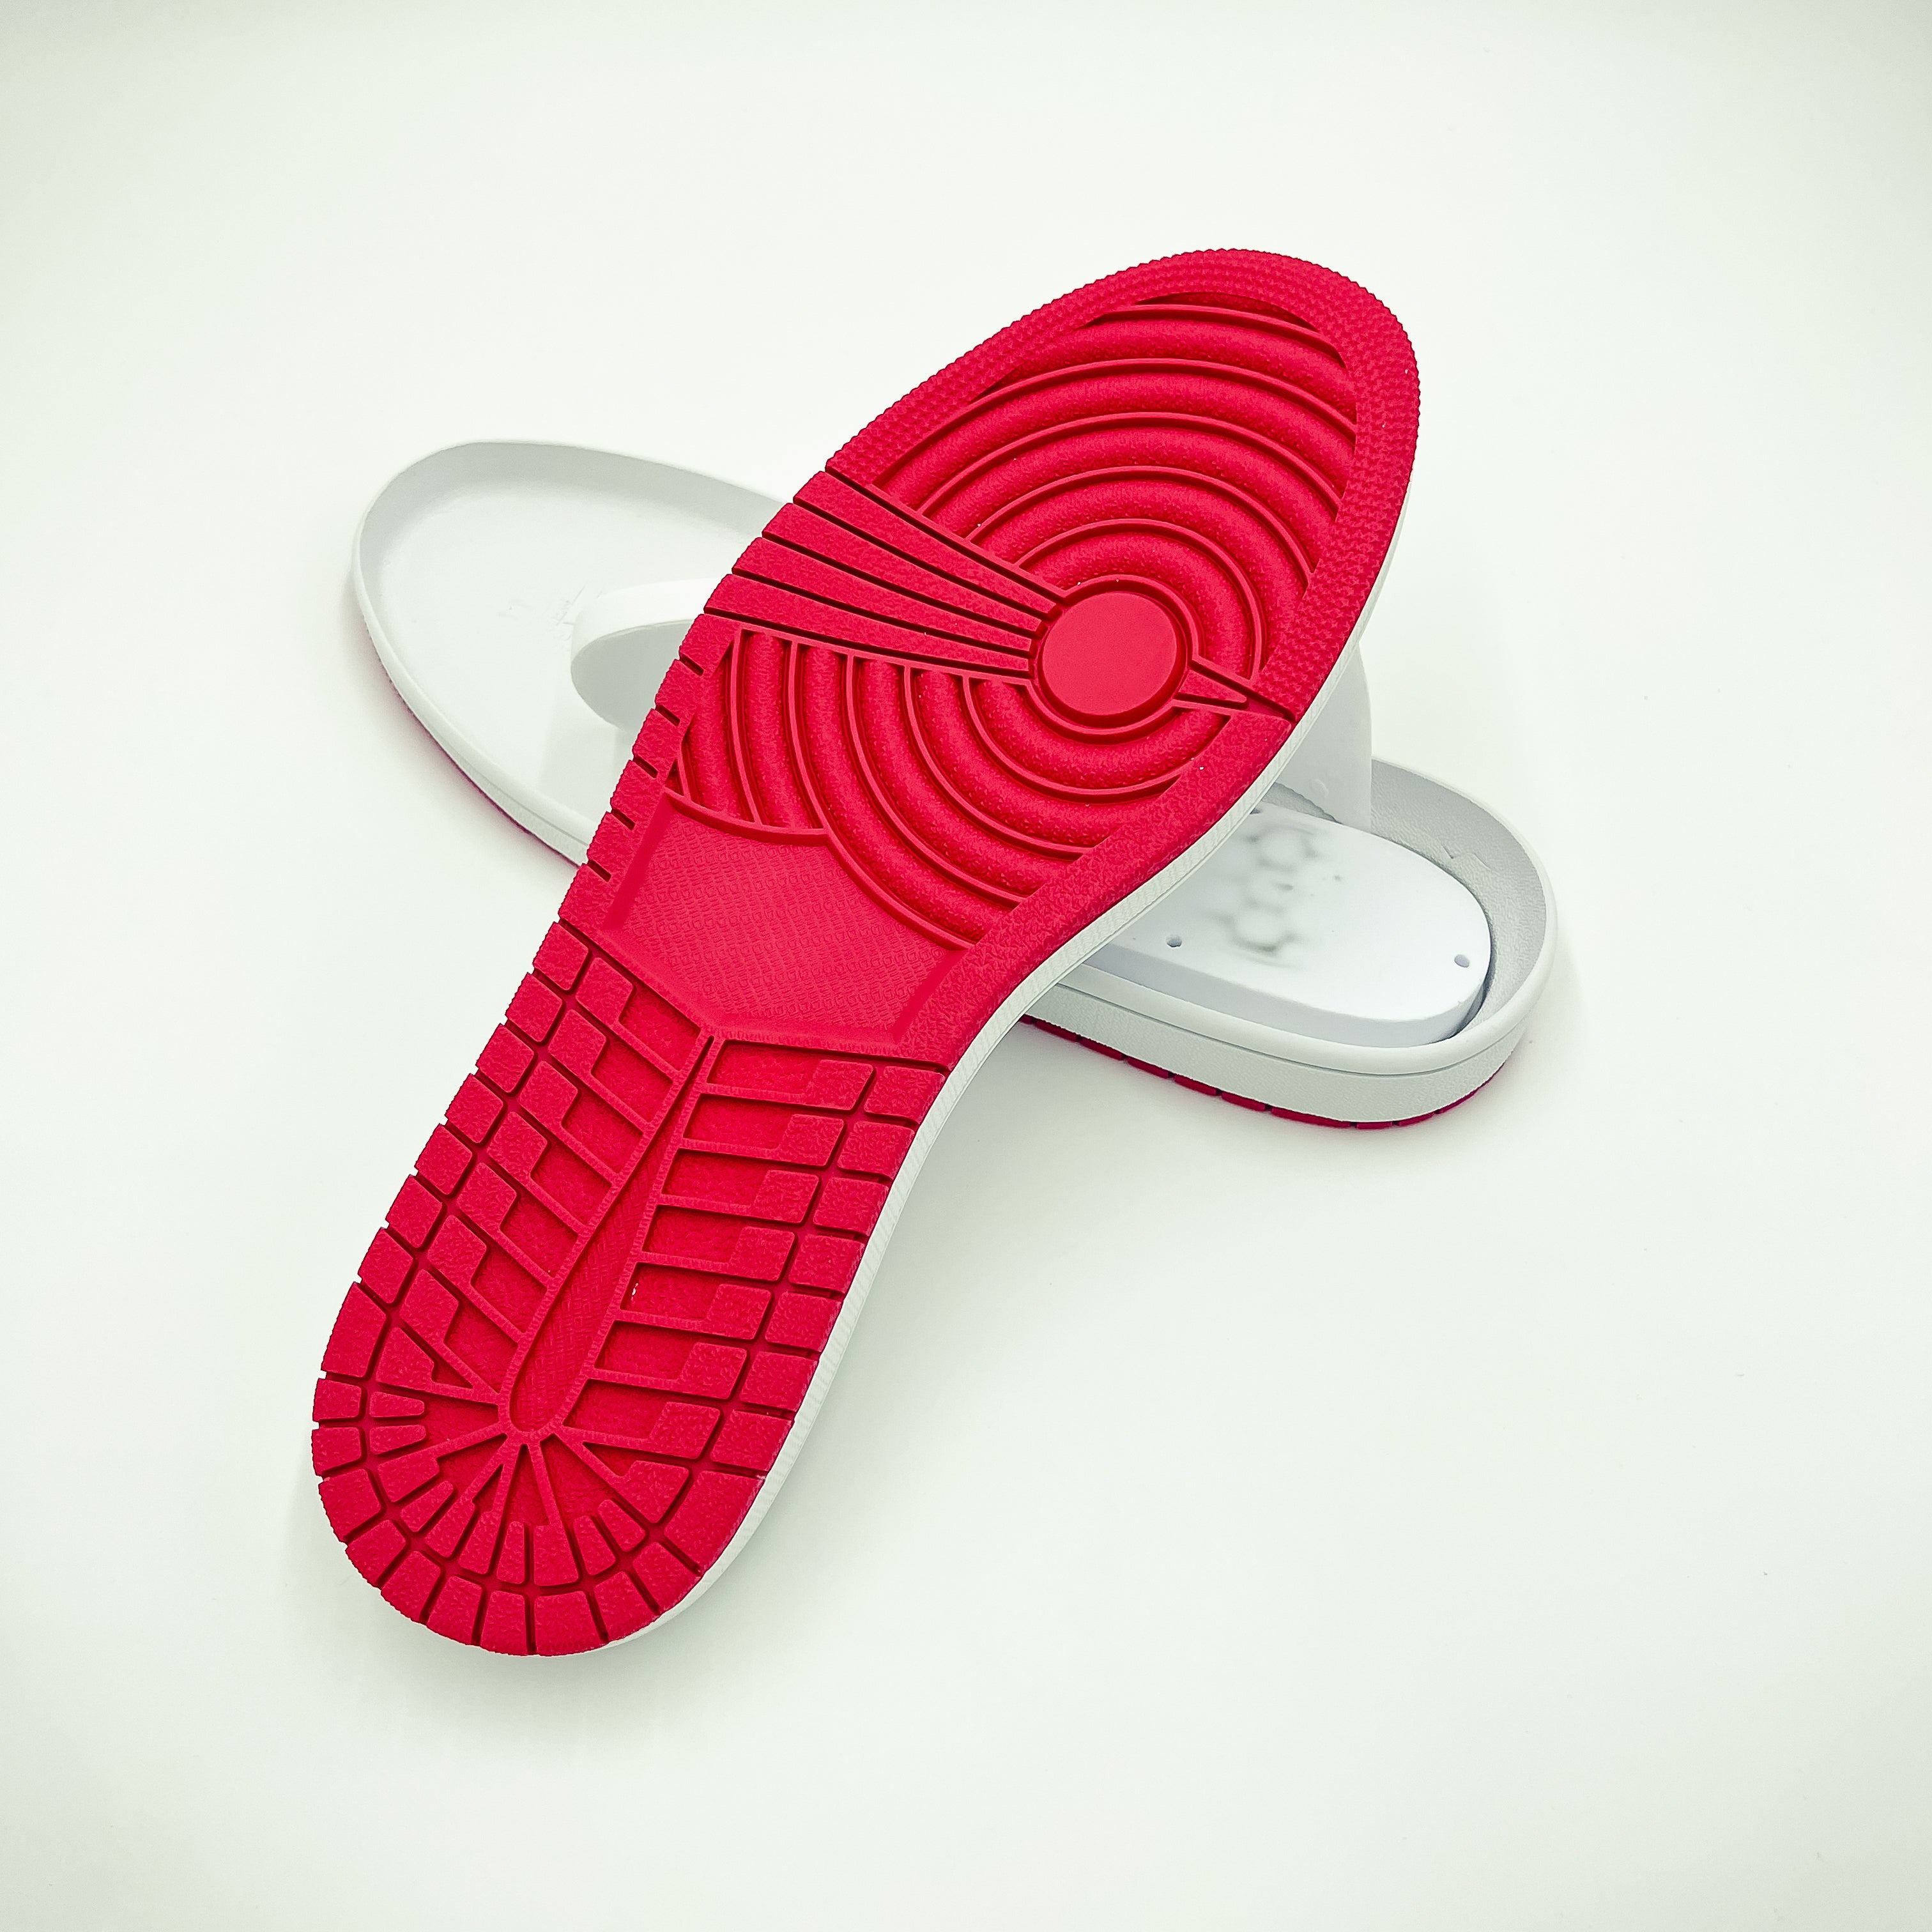 Basketball (AJ1) Shoe Soles, White/Red